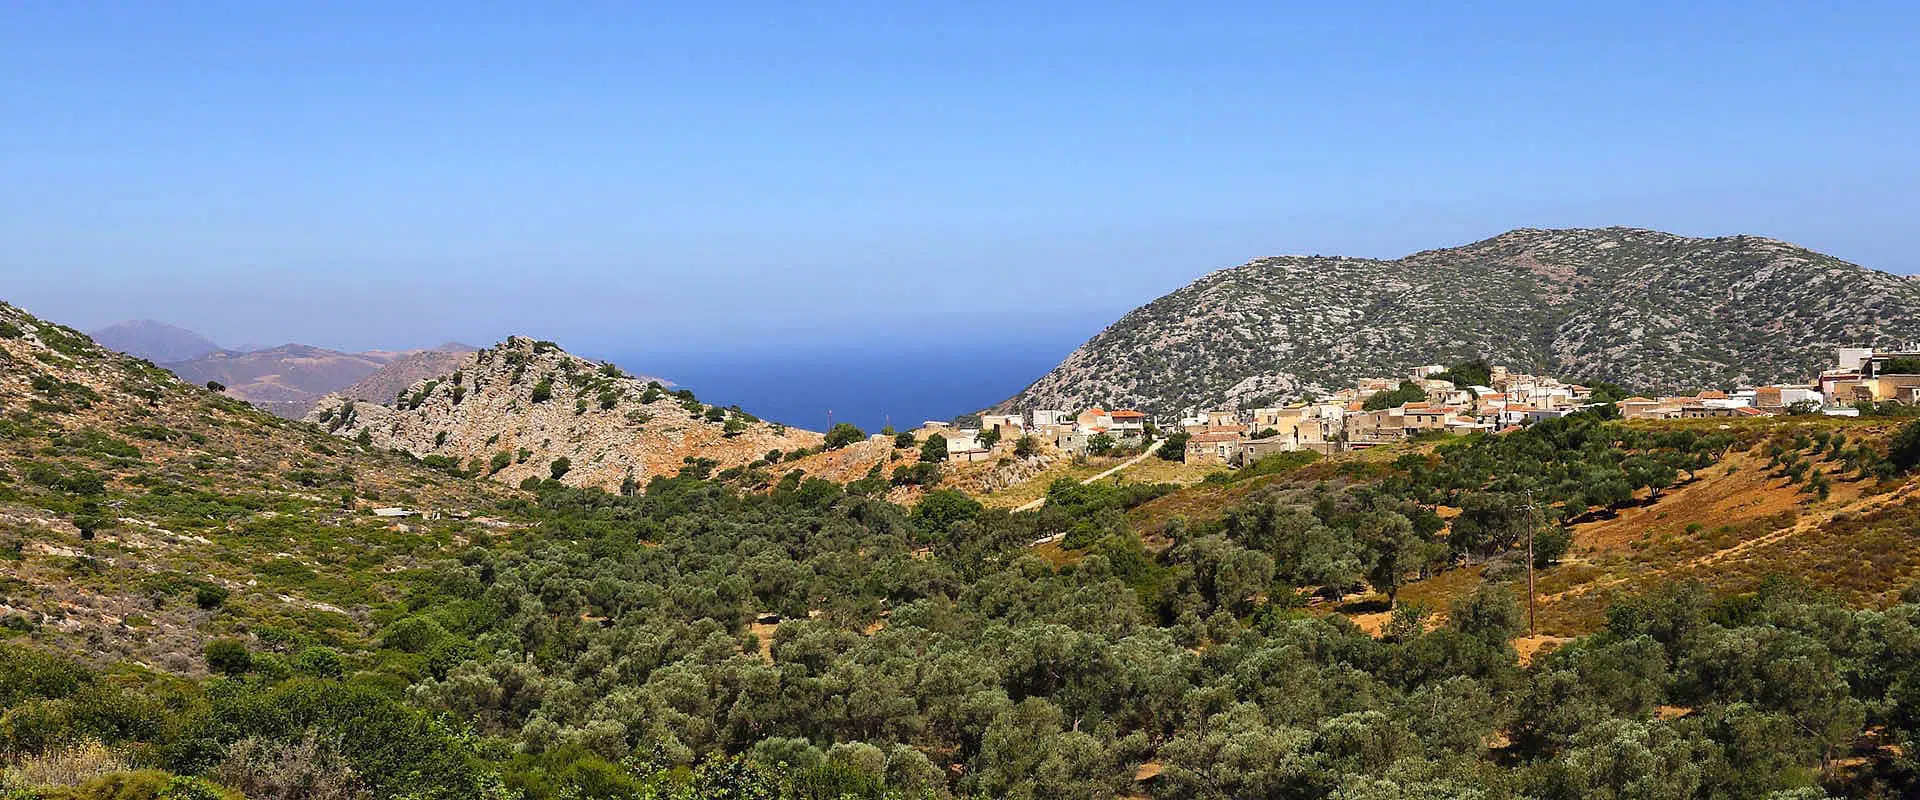 Ecotourism hotel villas on Crete Greece